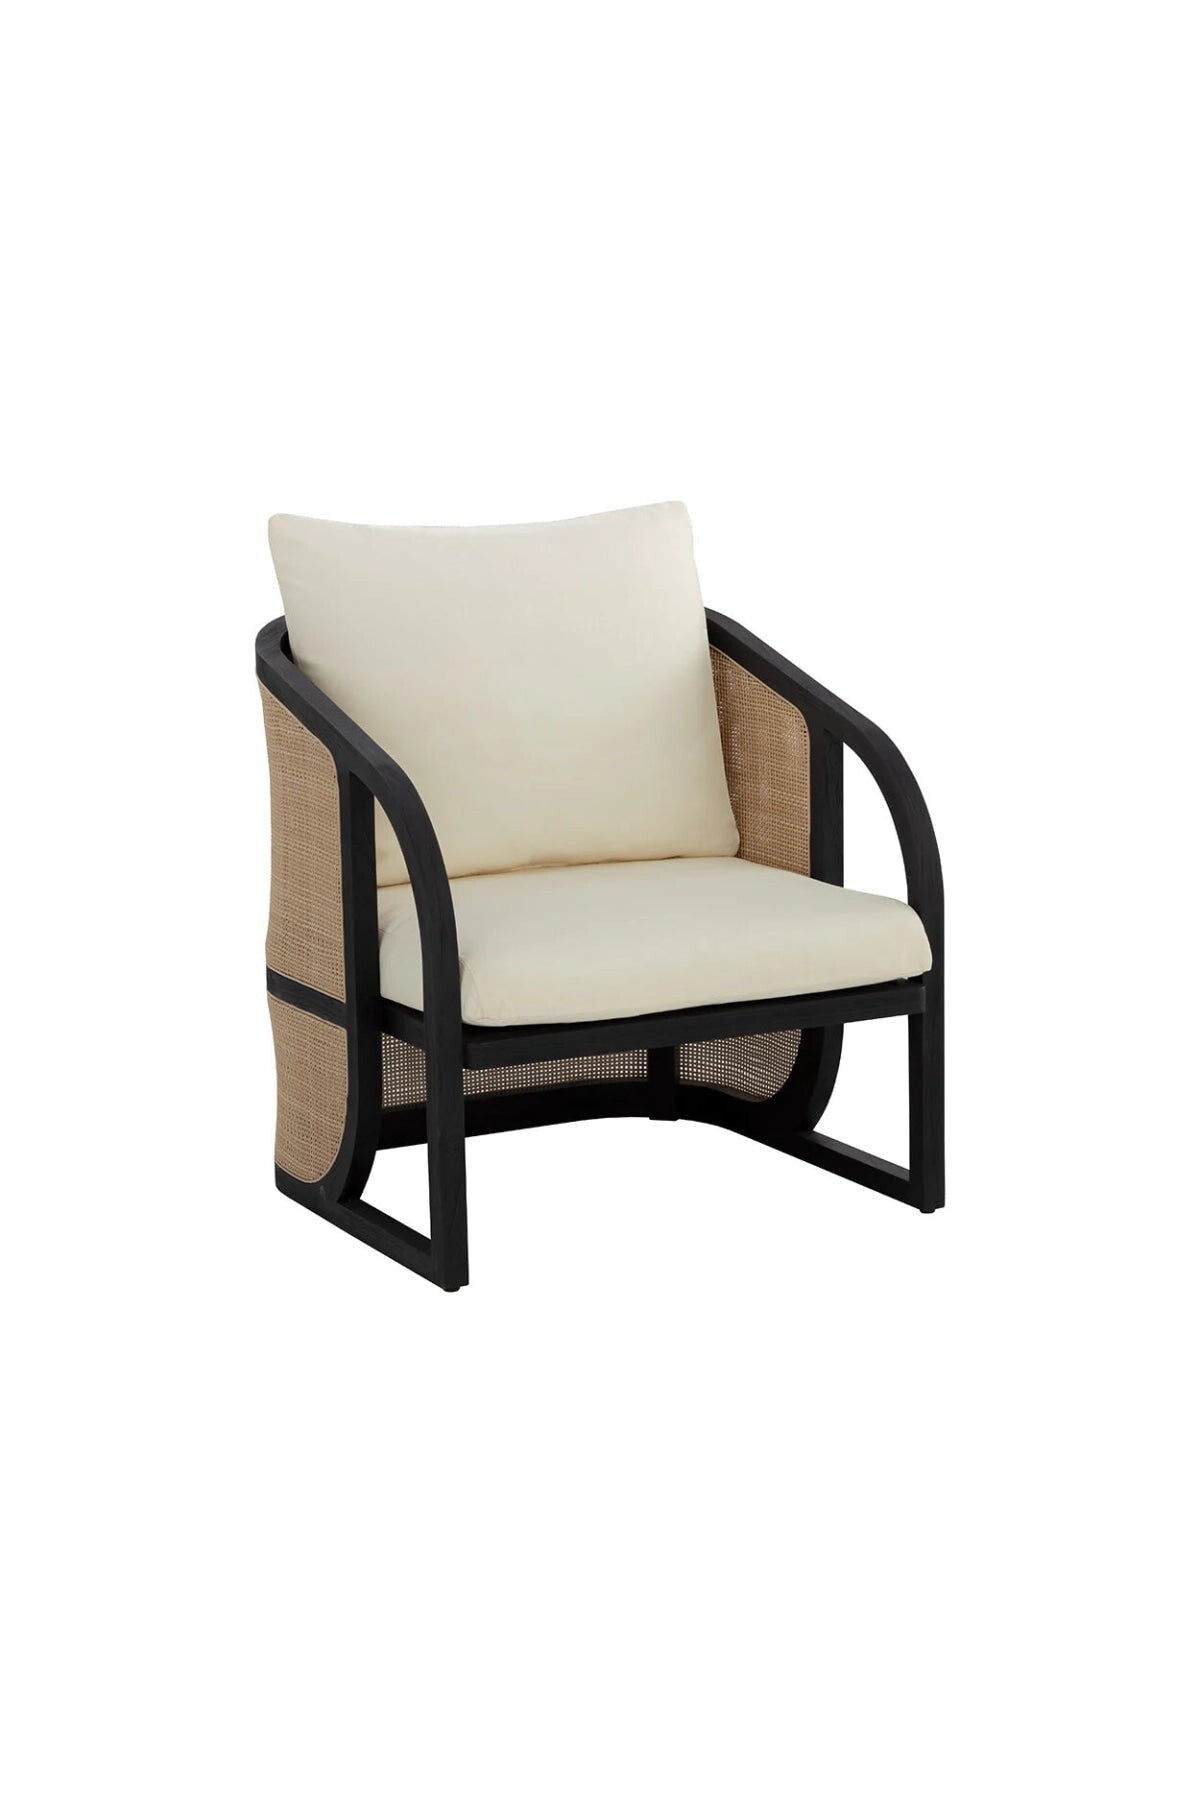 Verona Outdoor Chair - 2 Colors